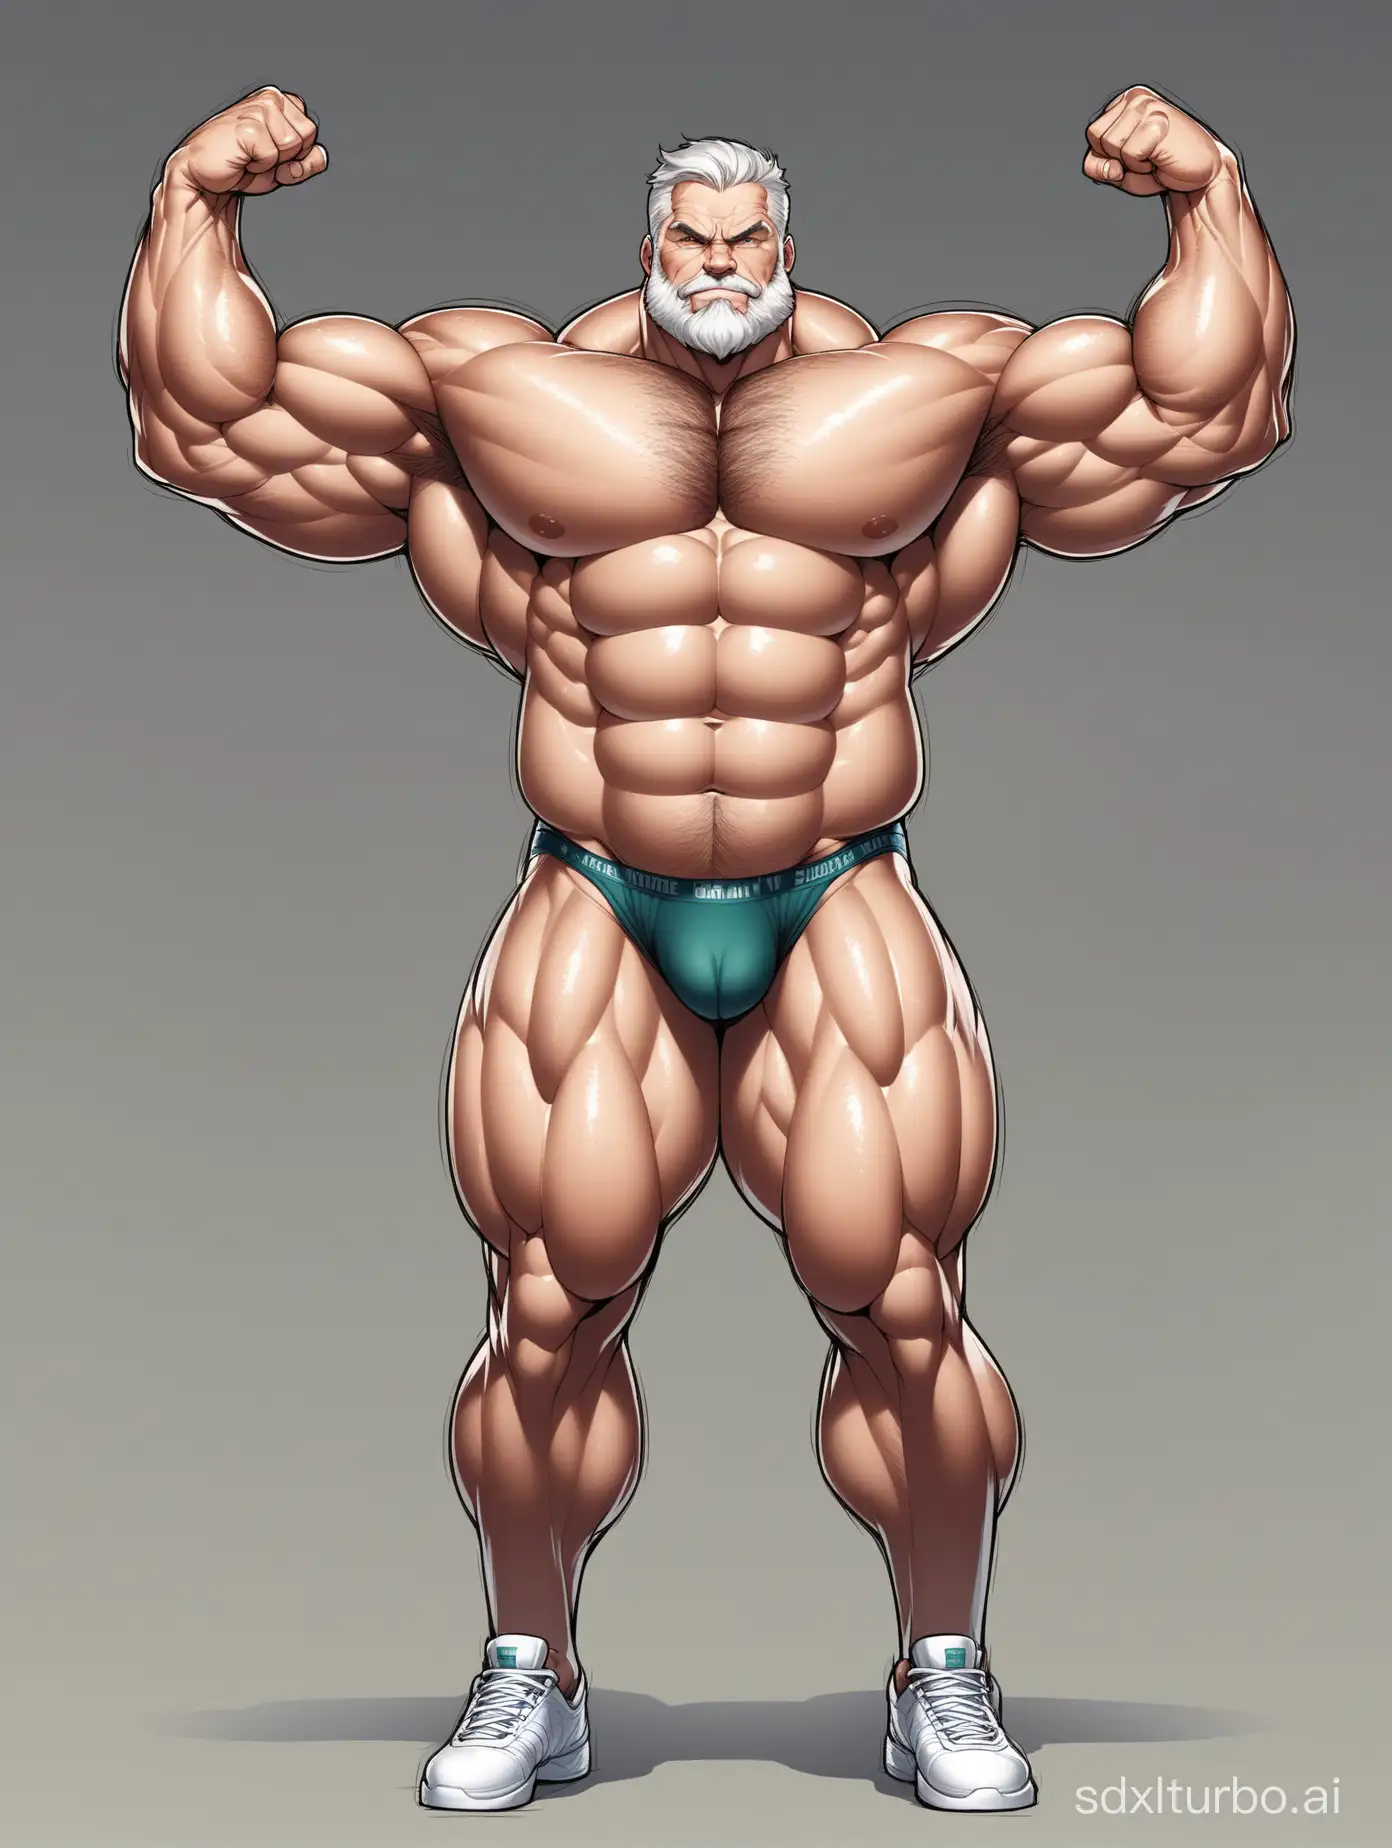 Huge-and-Muscular-Bodybuilder-Flexing-Biceps-in-Underwear